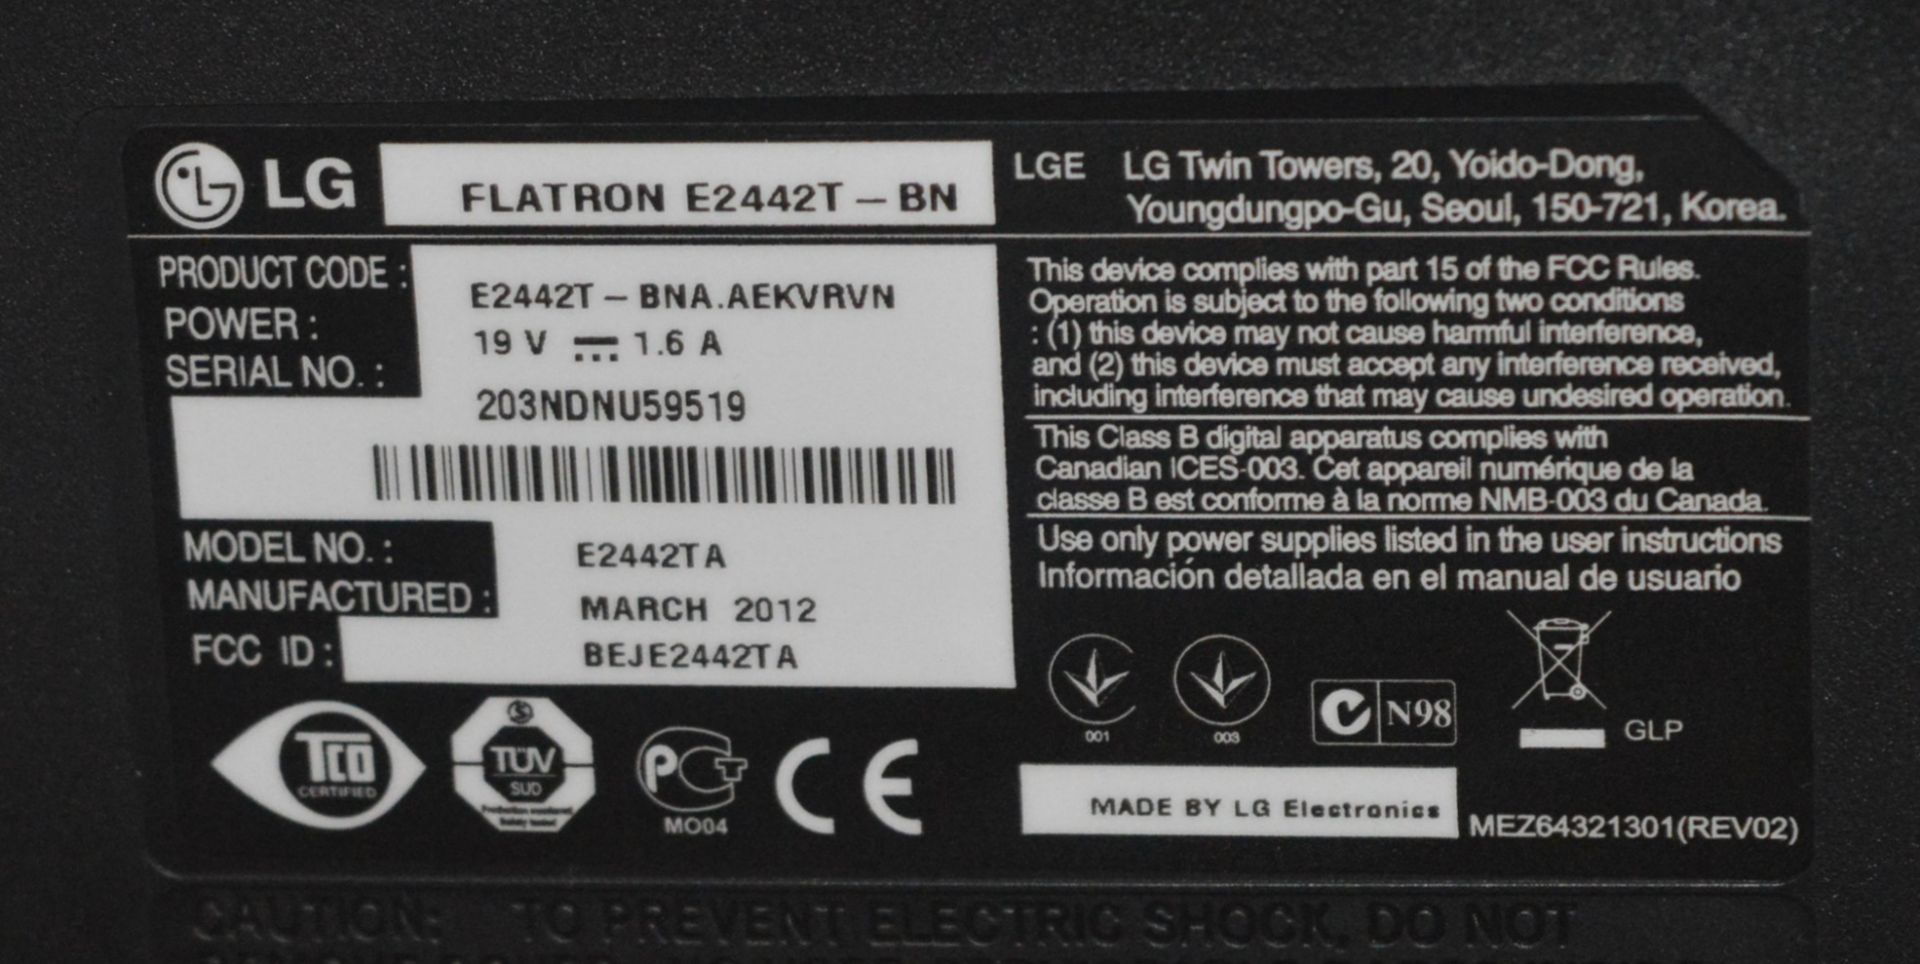 1 x LG Flatron E2442 Flat Screen LED 24 Inch Monitor - 1920x1080 Resolution - Full HD Ready - Includ - Image 5 of 5